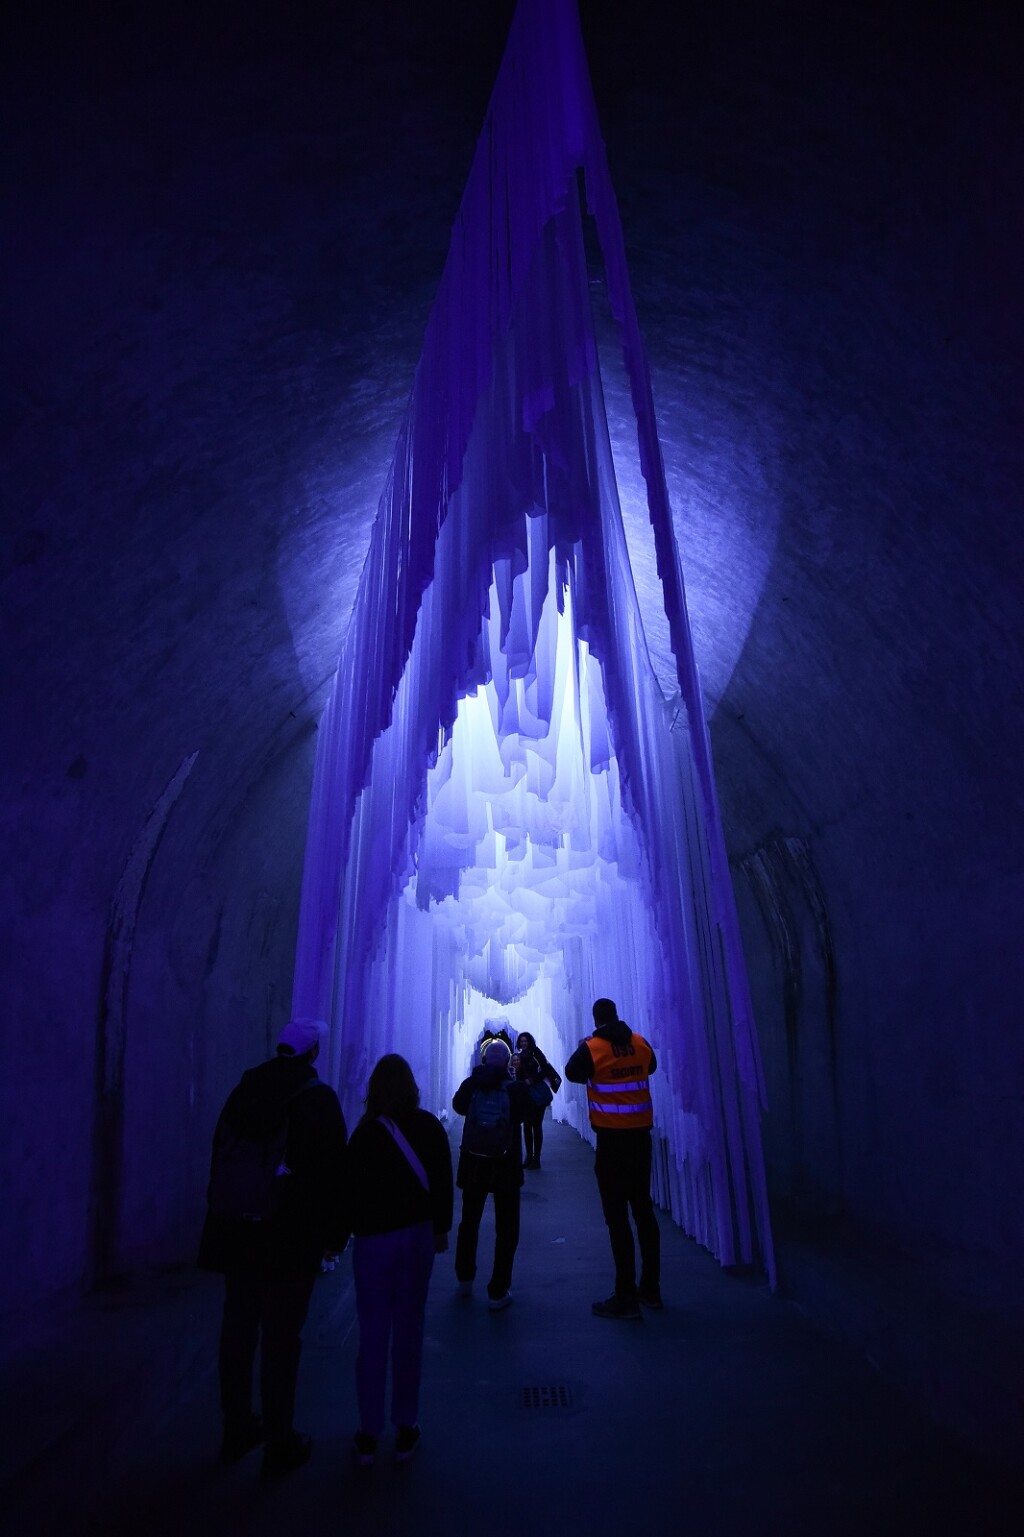 Instalacija polarni san u tunelu Grič u Zagrebu - 2